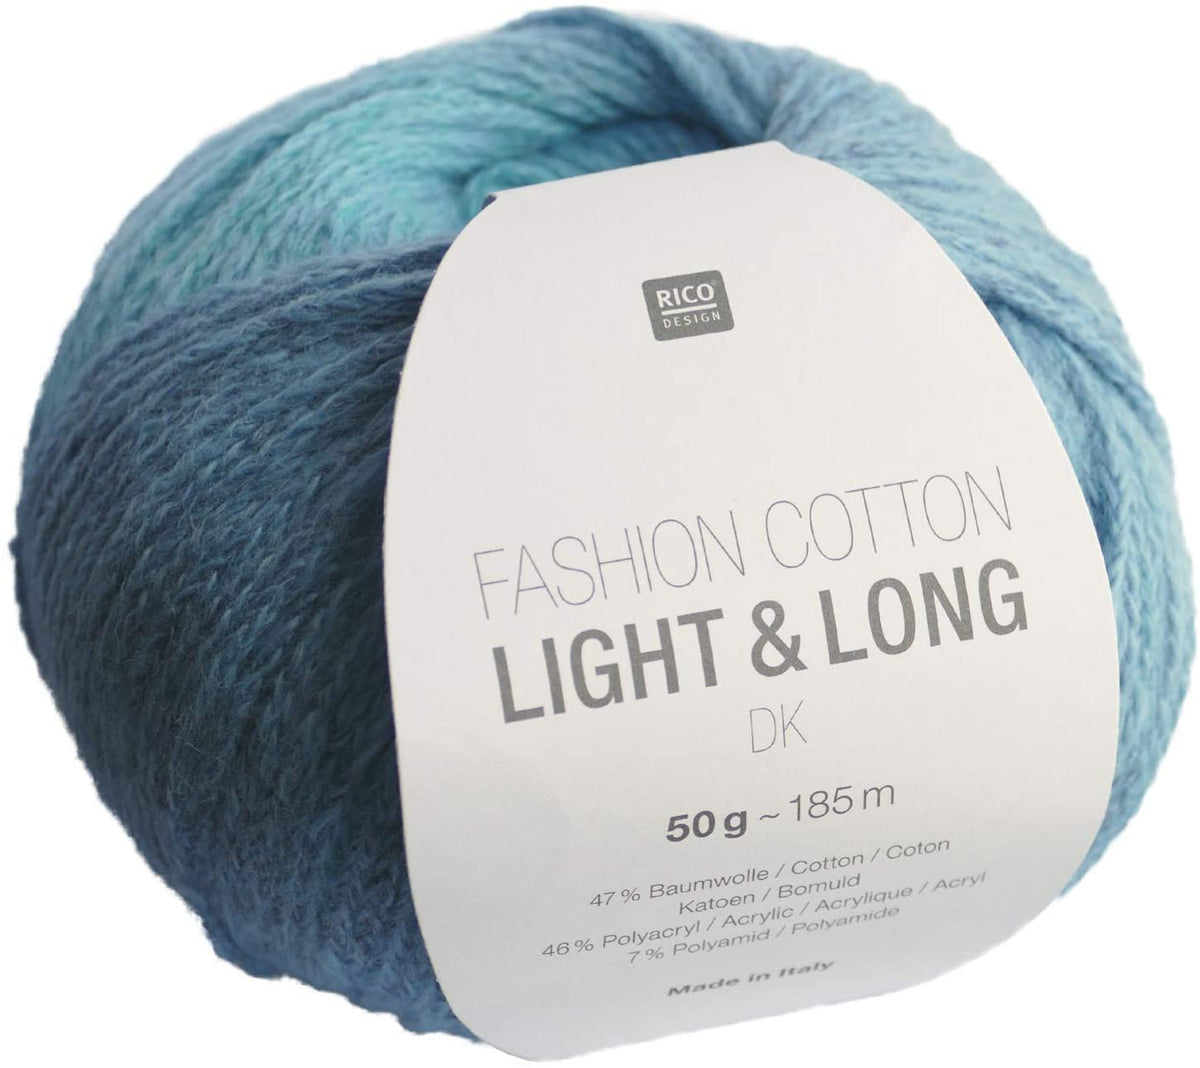 Rico Fashion Cotton Light & Long Dk (50g)